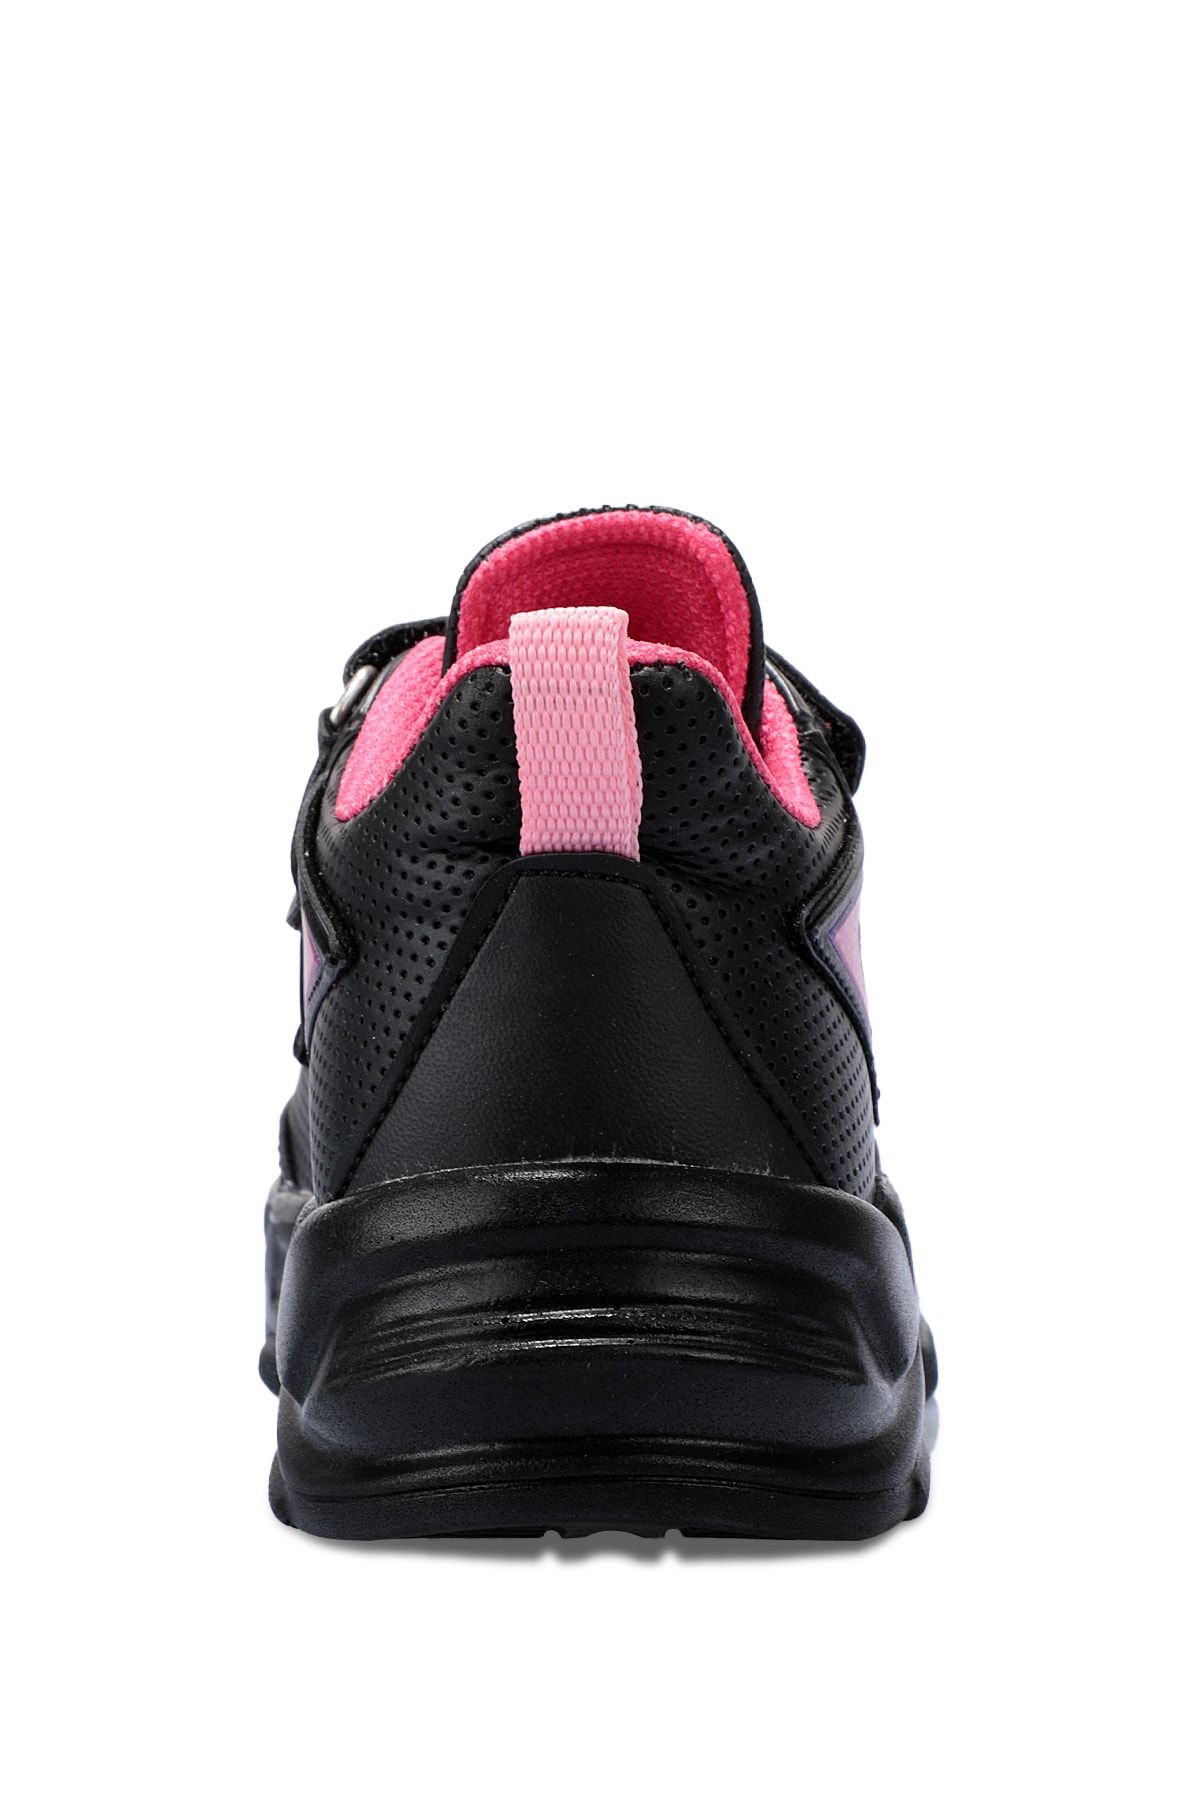 Slazenger Sa22lf015-560 Kasumı F Kız Çocuk Spor Ayakkabı Siyah Fuşya